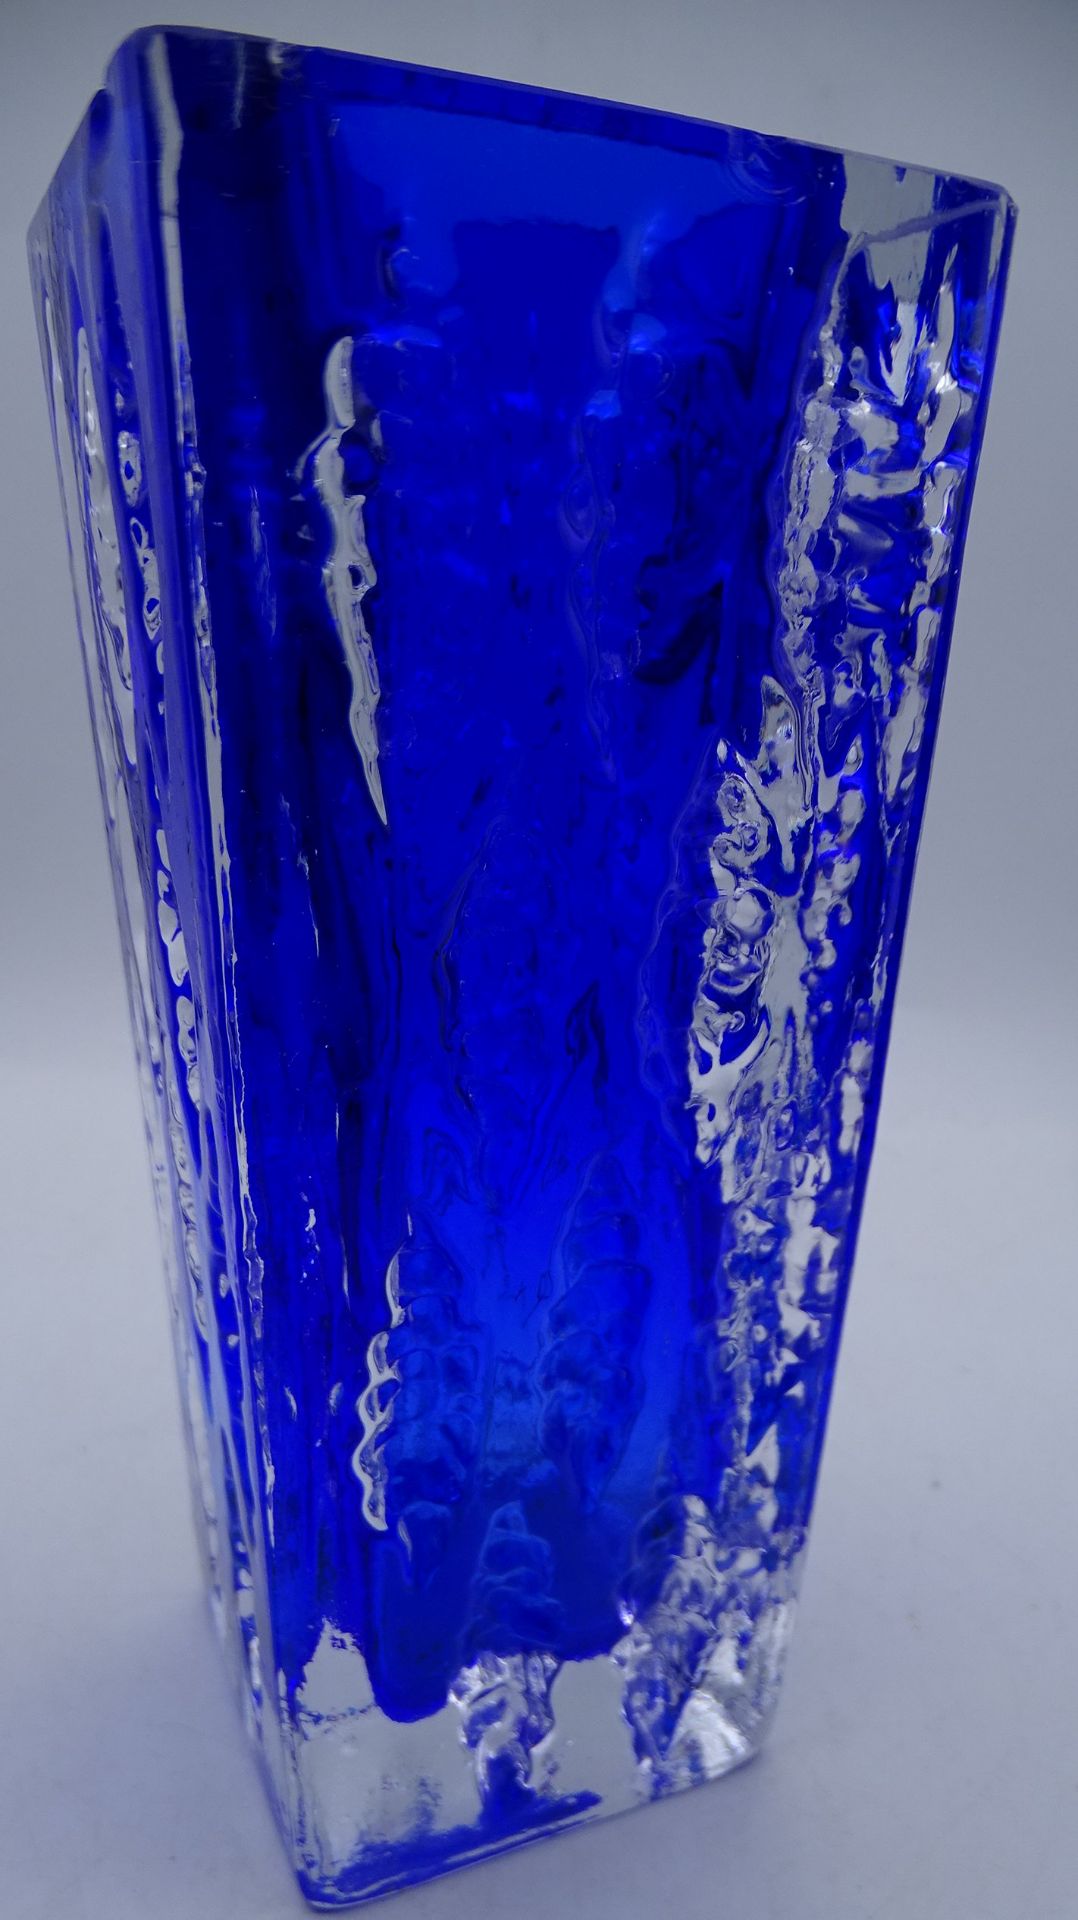 blau/klare dicke Kunstglasvase, H-18 cm, 8x8 cm, Rand oben mehrere kl. Abplatzer0 - Image 4 of 5